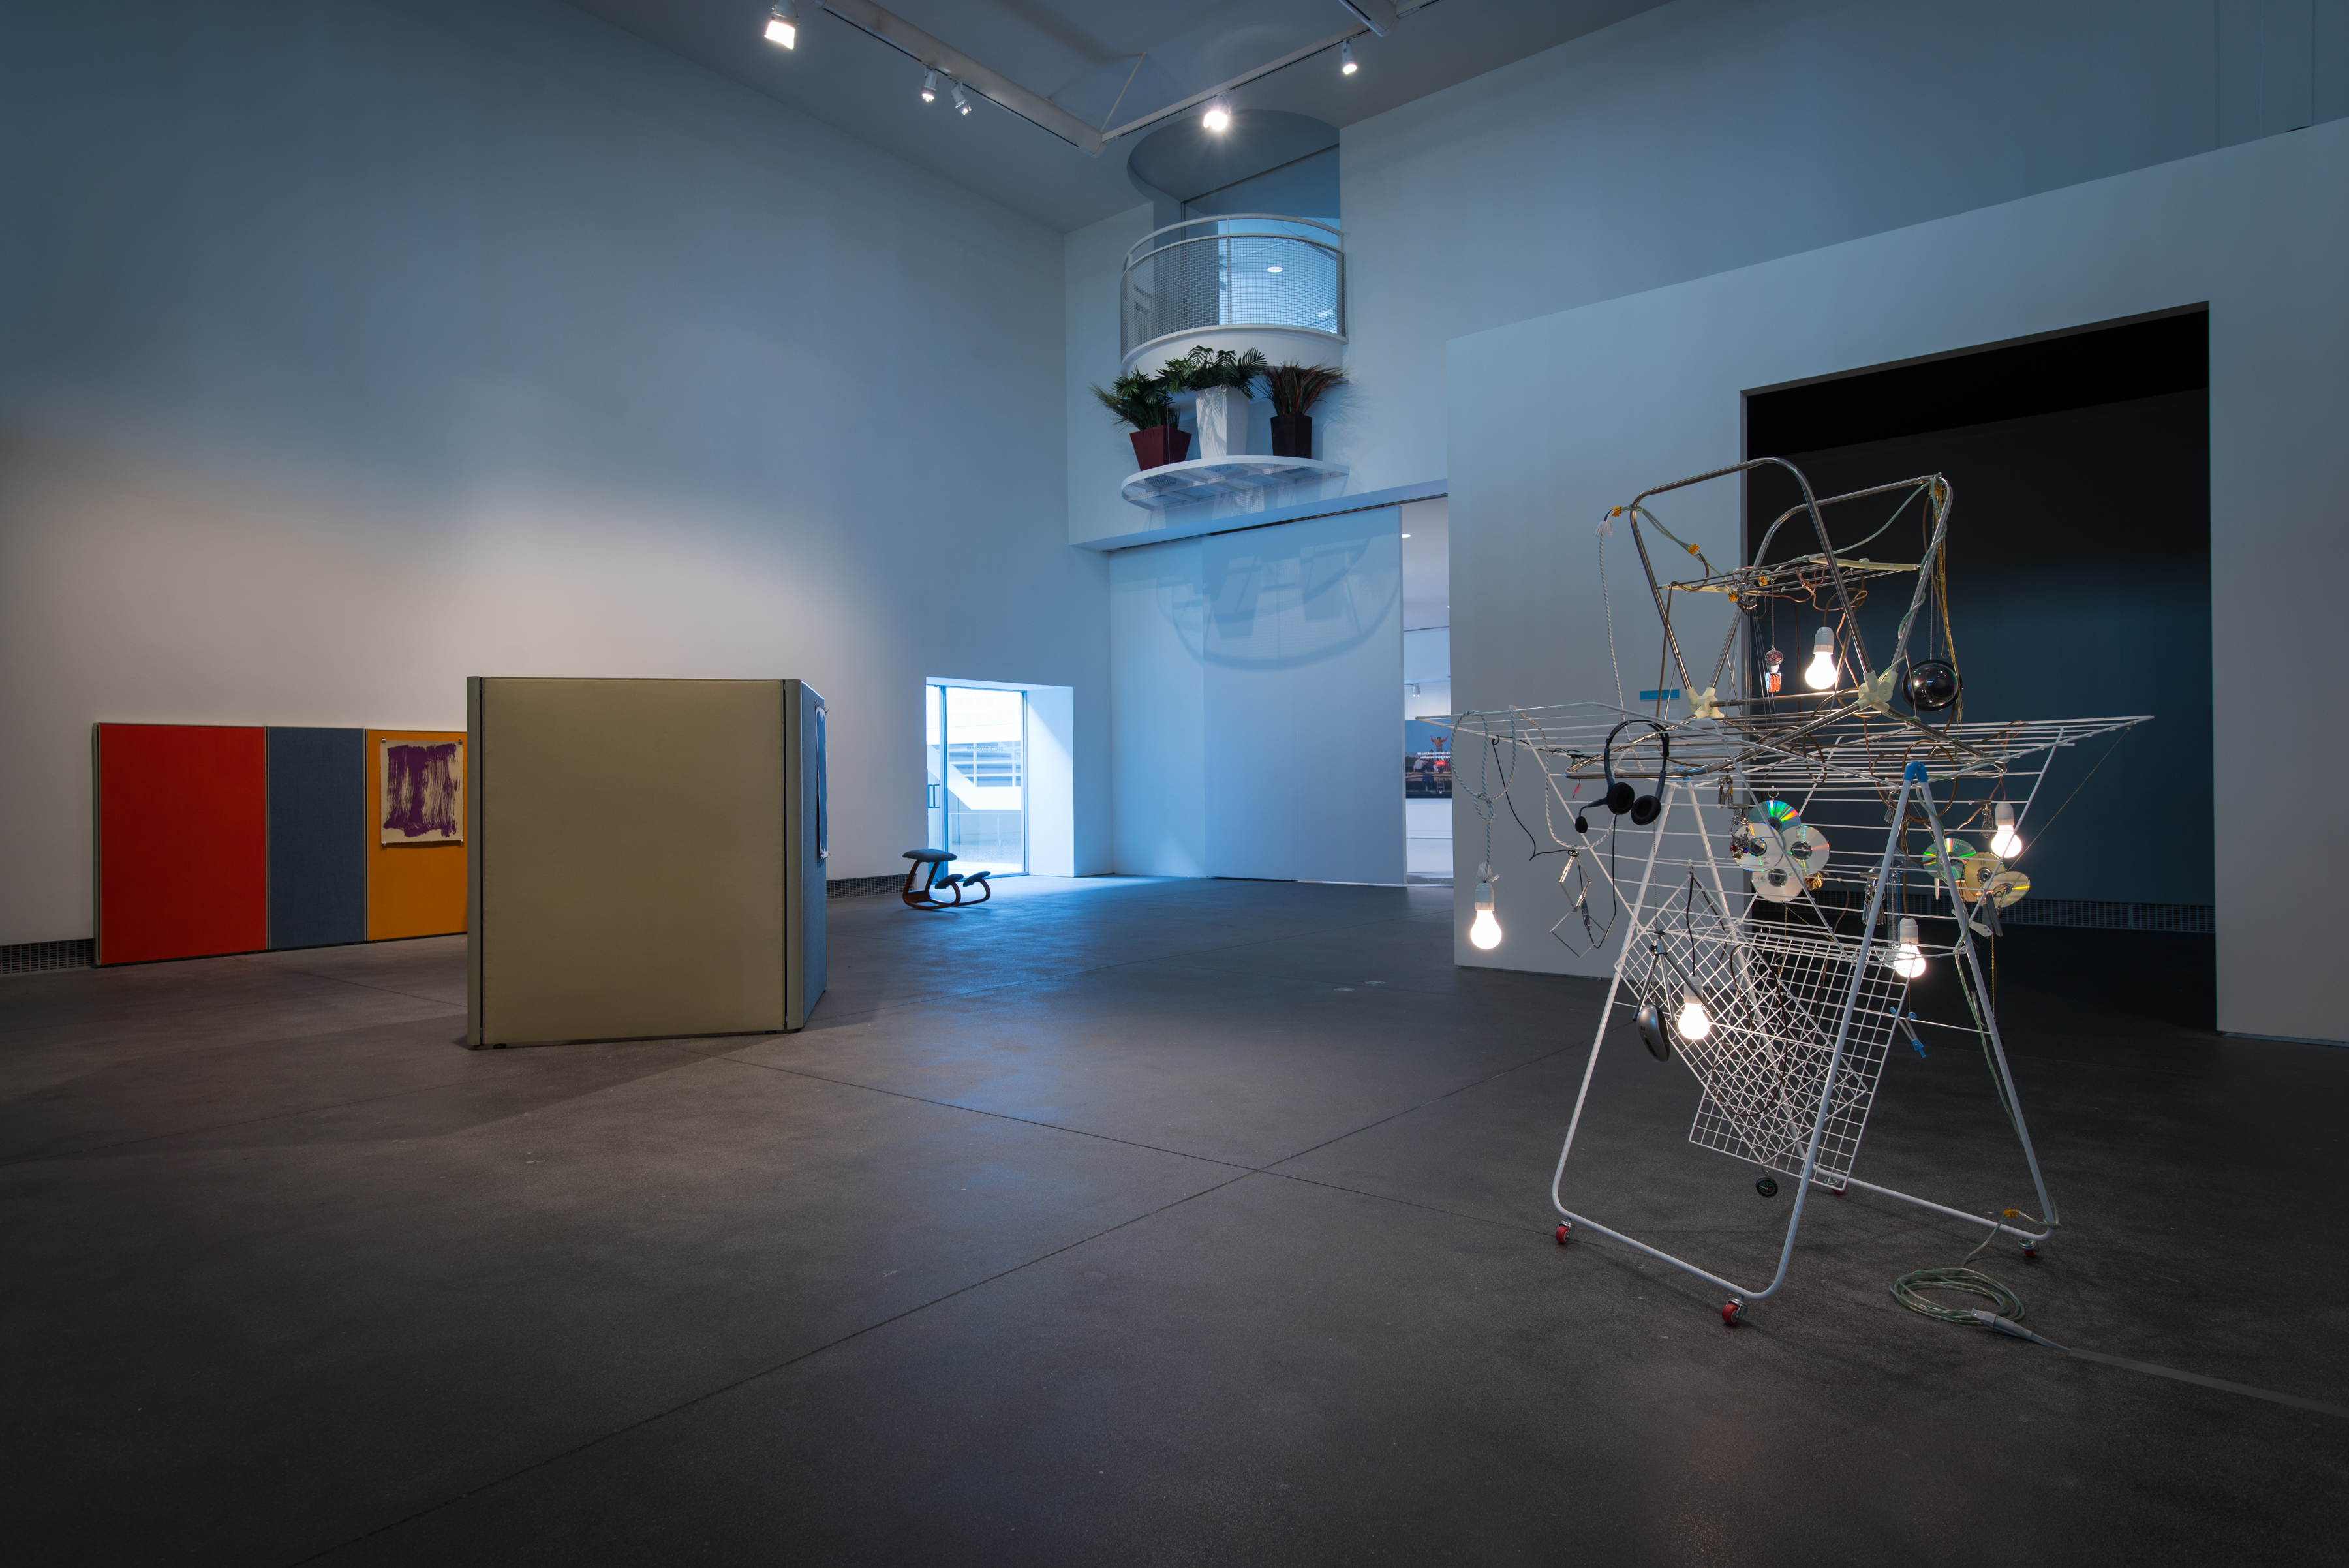 Office Space, installation view, Yerba Buena Center for the Arts, 2015. Courtesy Yerba Buena Center for the Arts / Charlie Villyard